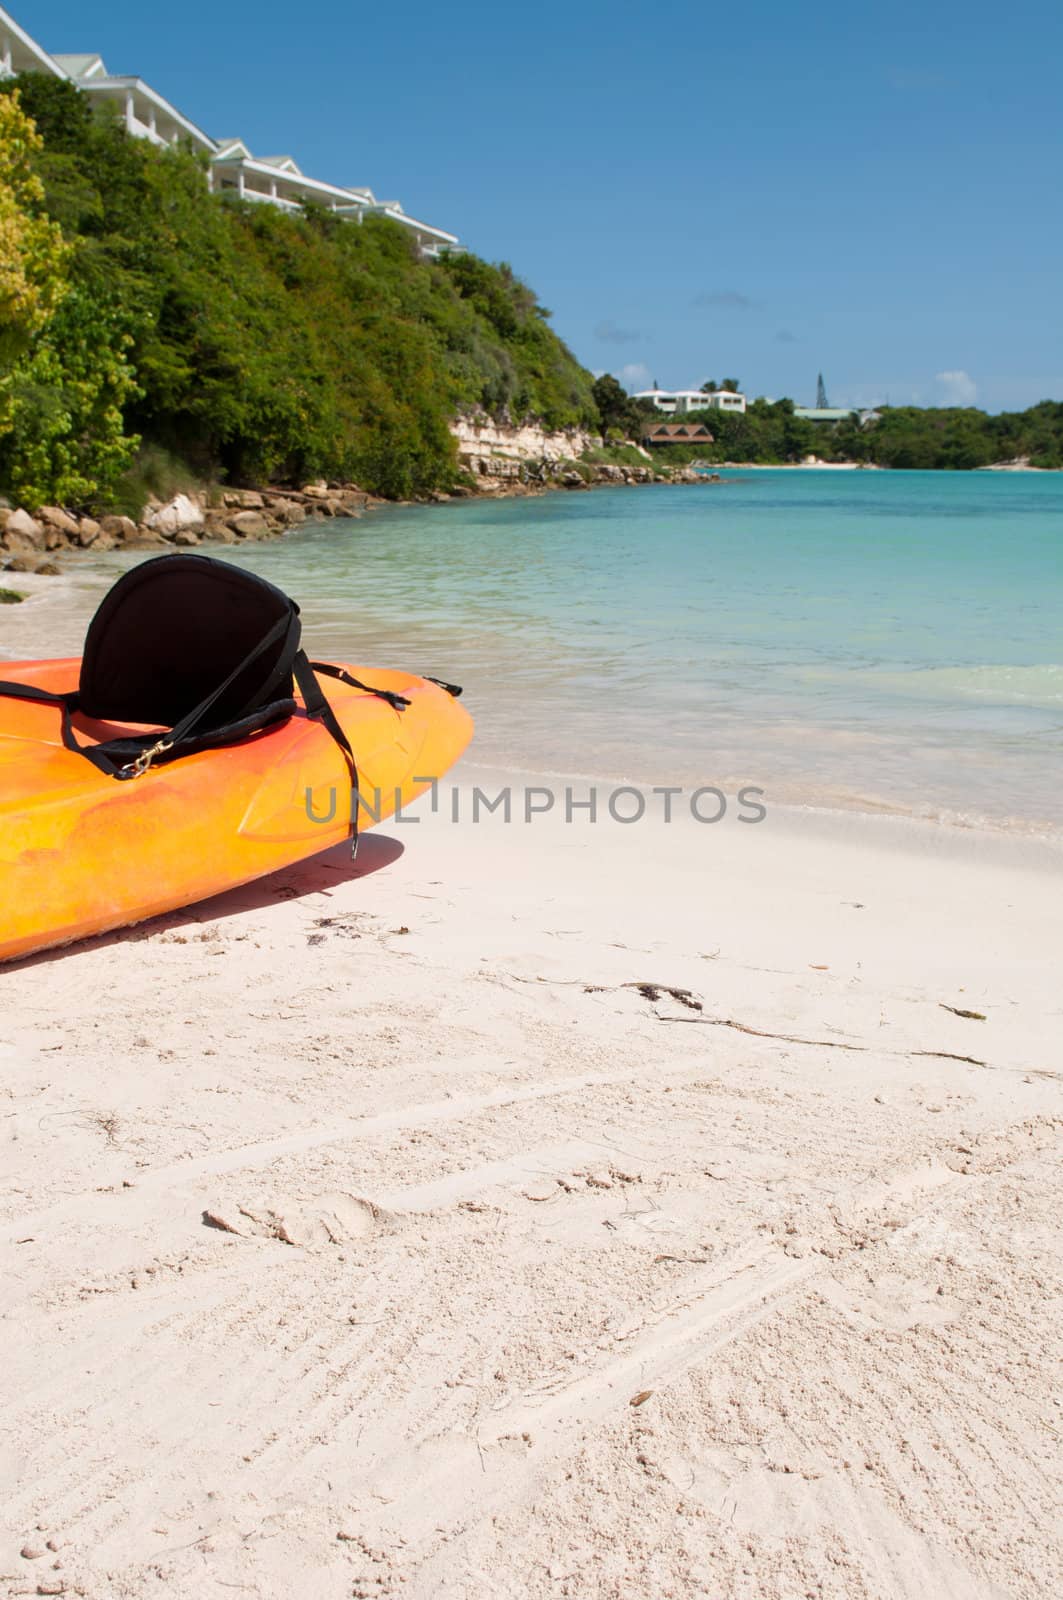 Kayak on beach by luissantos84